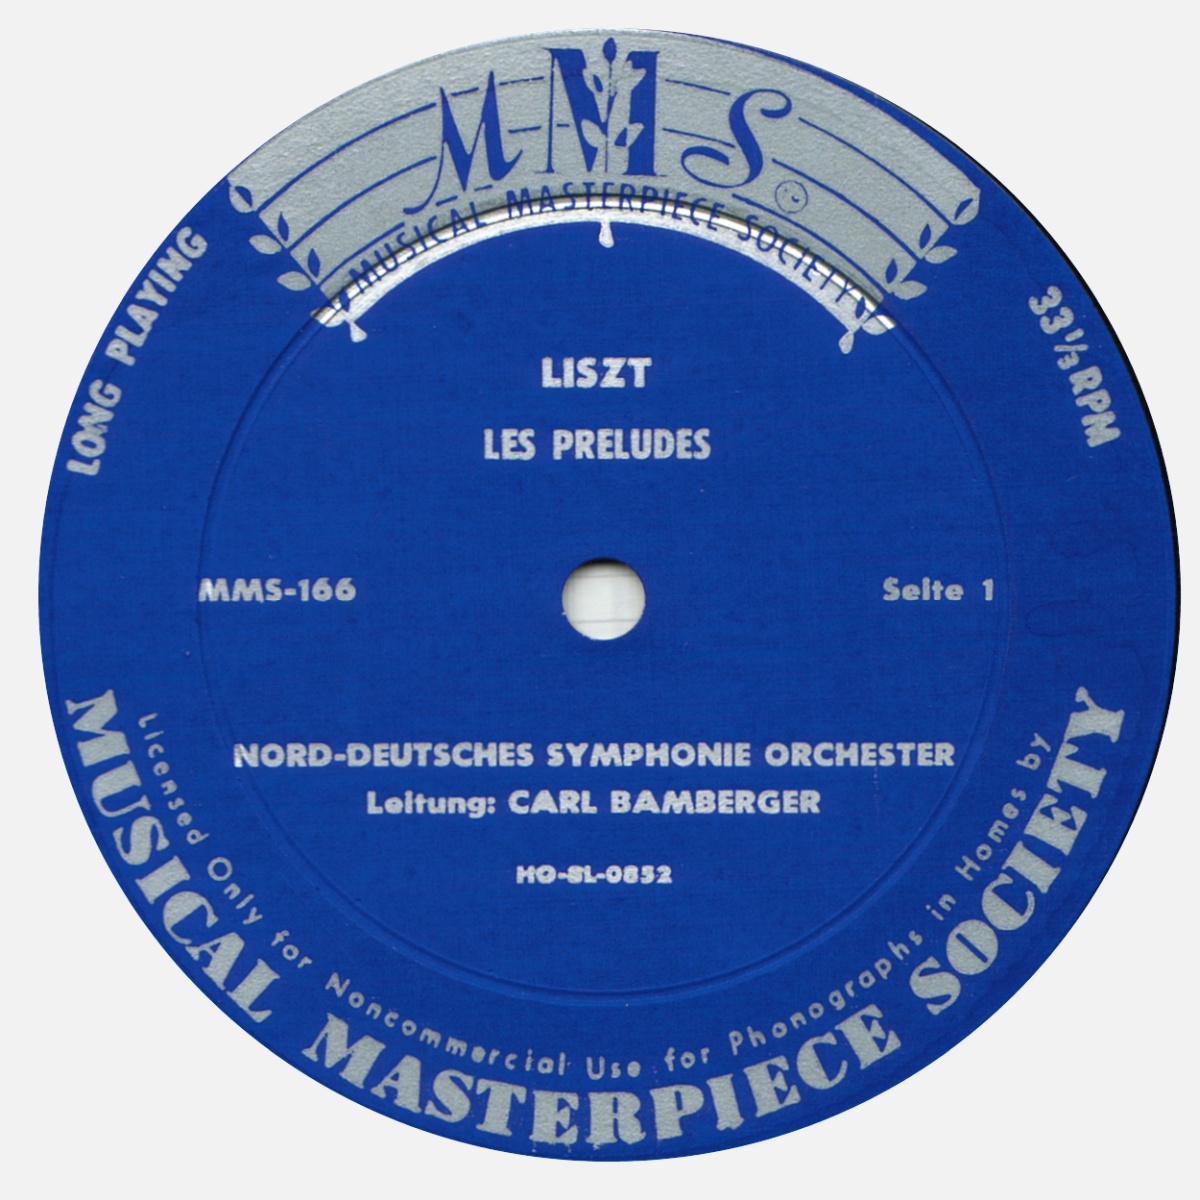 «Musical Masterpiece Society» MMS 166, Étiquette du disque recto